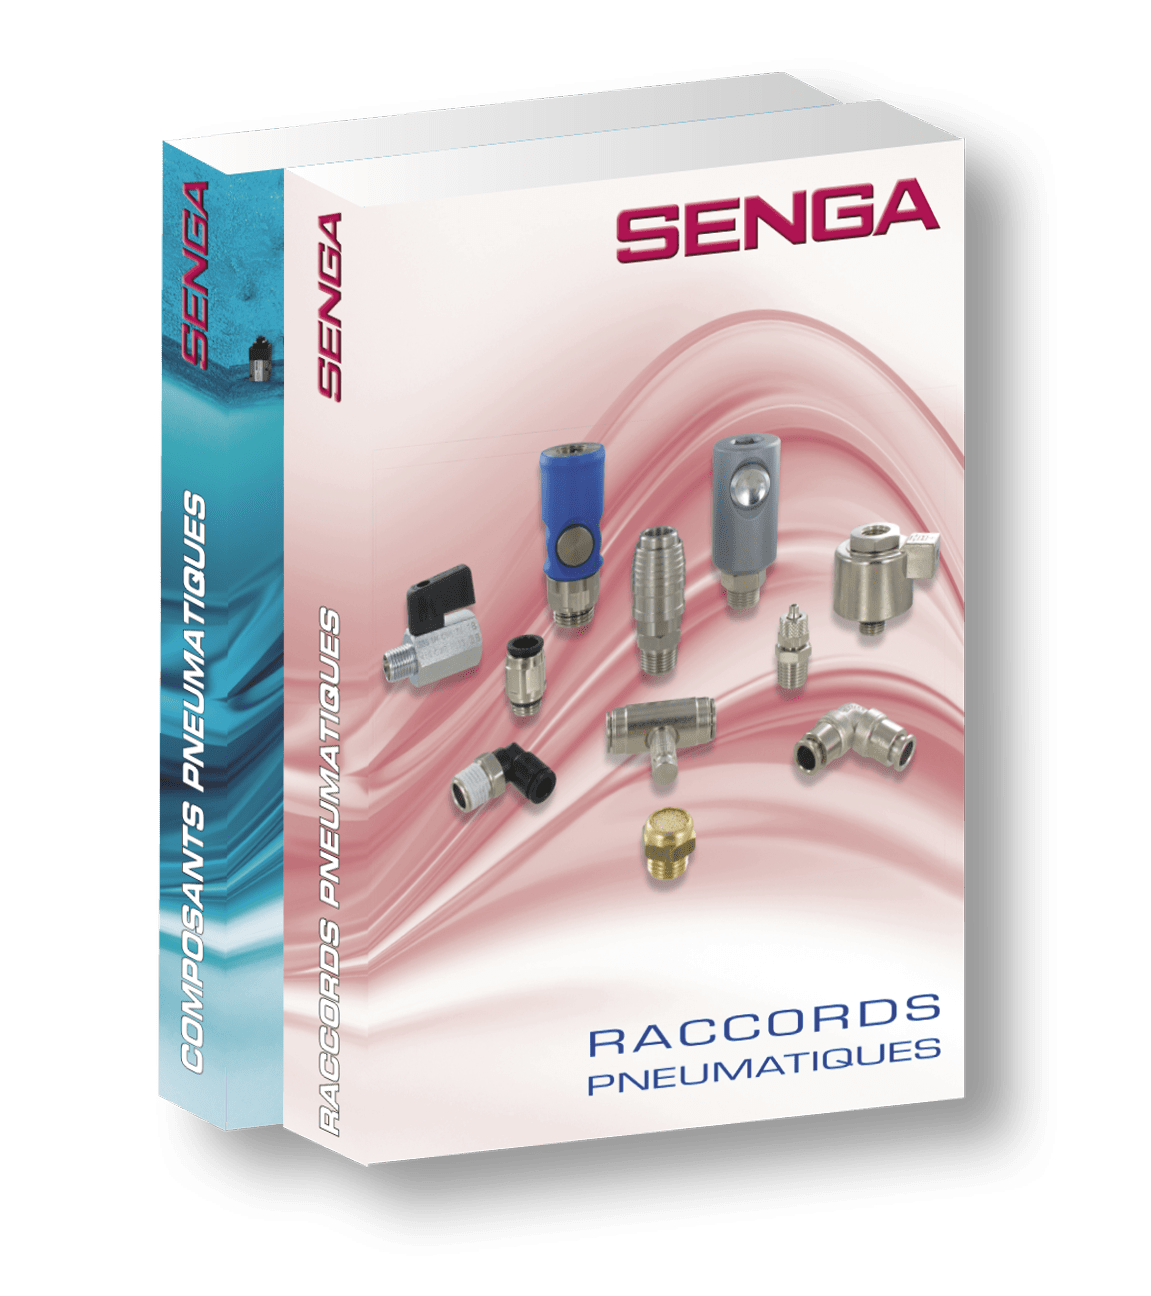 Catalogues raccords et composants pneumatiques SENGA